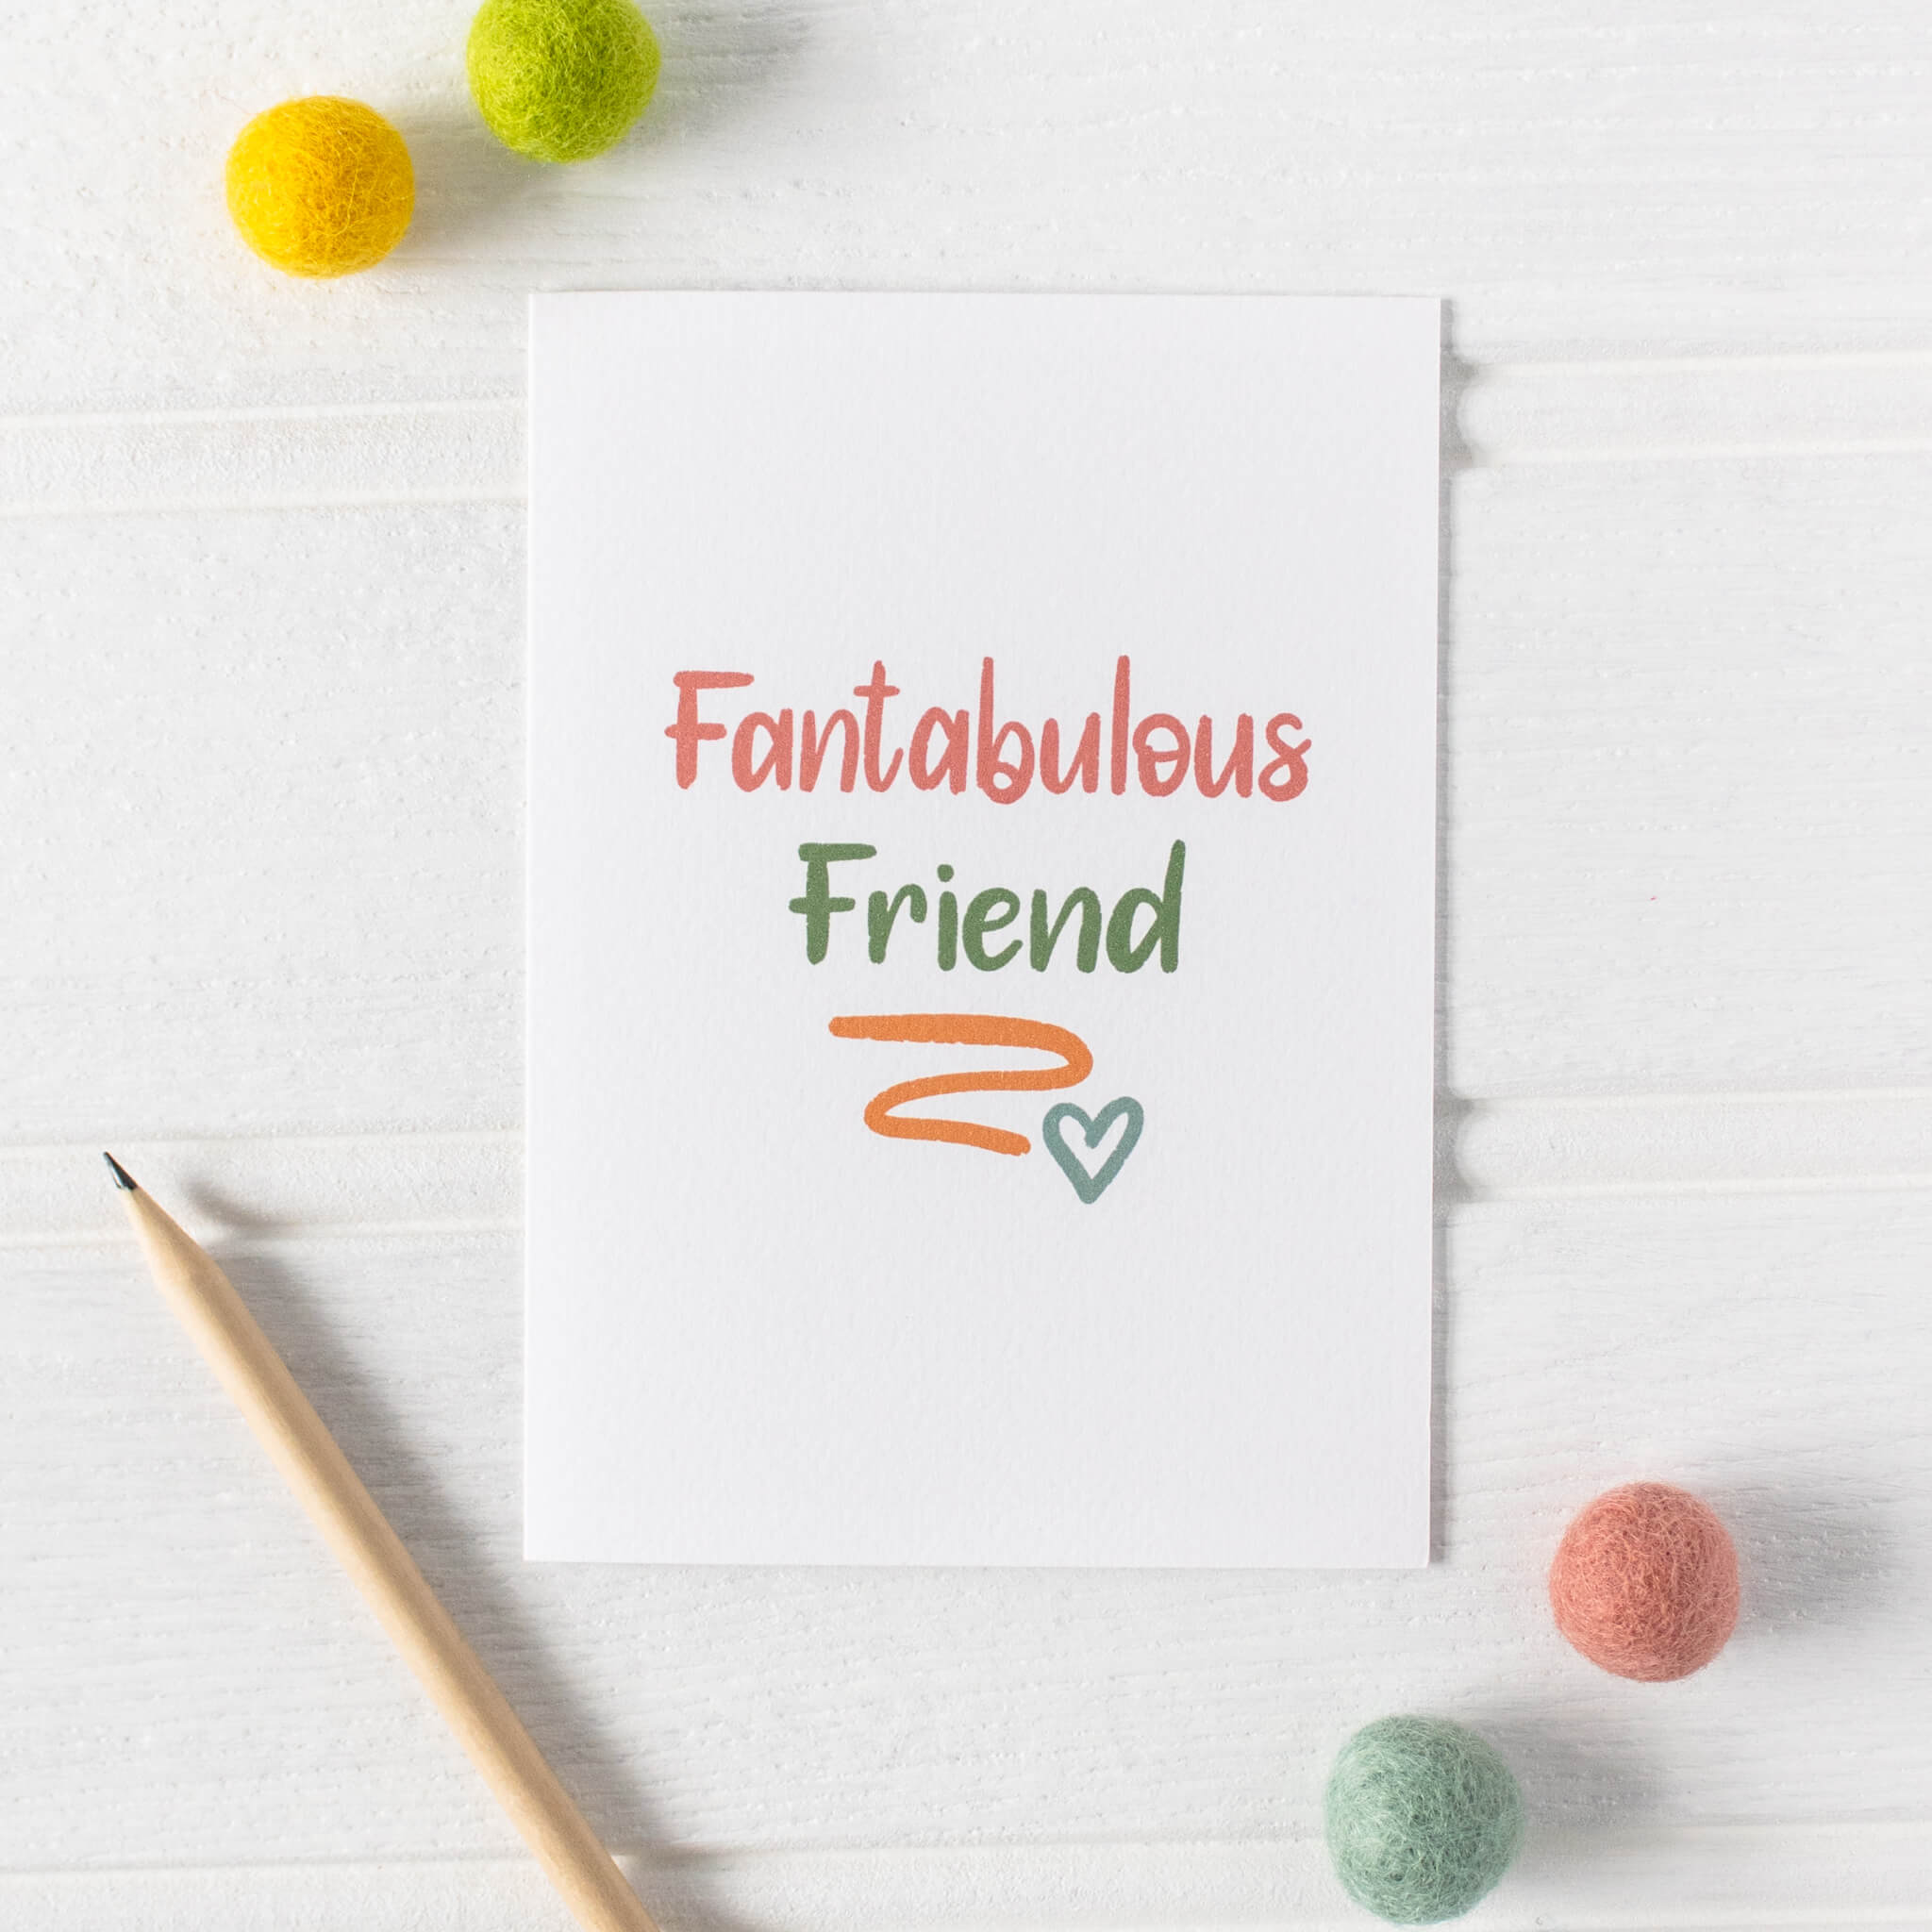 Fantabulous Friend card